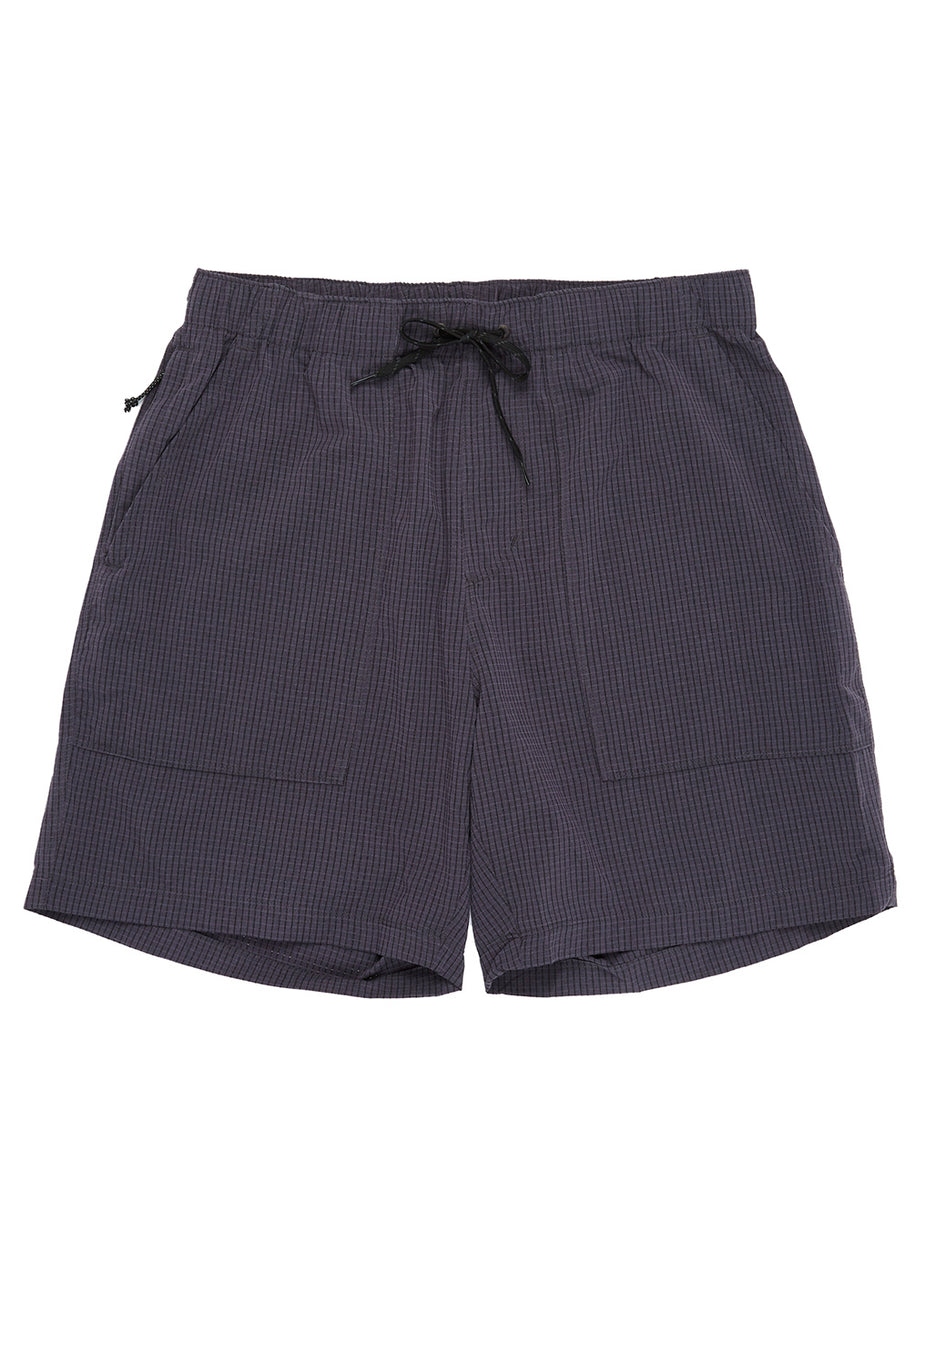 Men's Columbia Mountaindale Shorts in Olive Size: 3X | 100% Nylon | George Richards